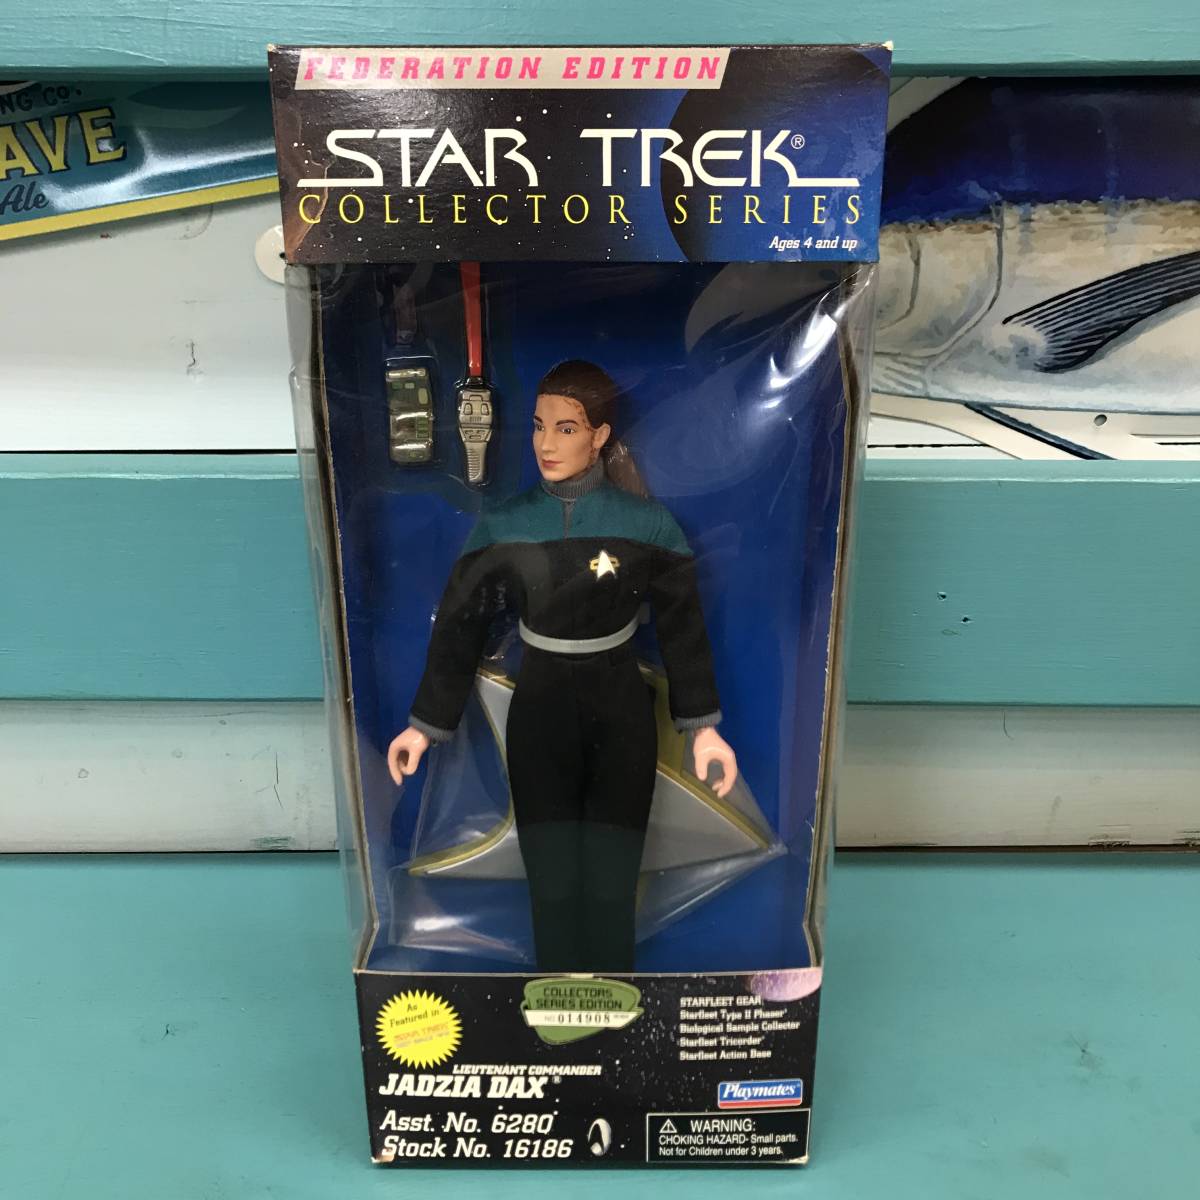 [STAR TREK* Star Trek ]JADZIA DAX фигурка * кукла *Playmates*SF SciFi*Collectors Series* collector серии 